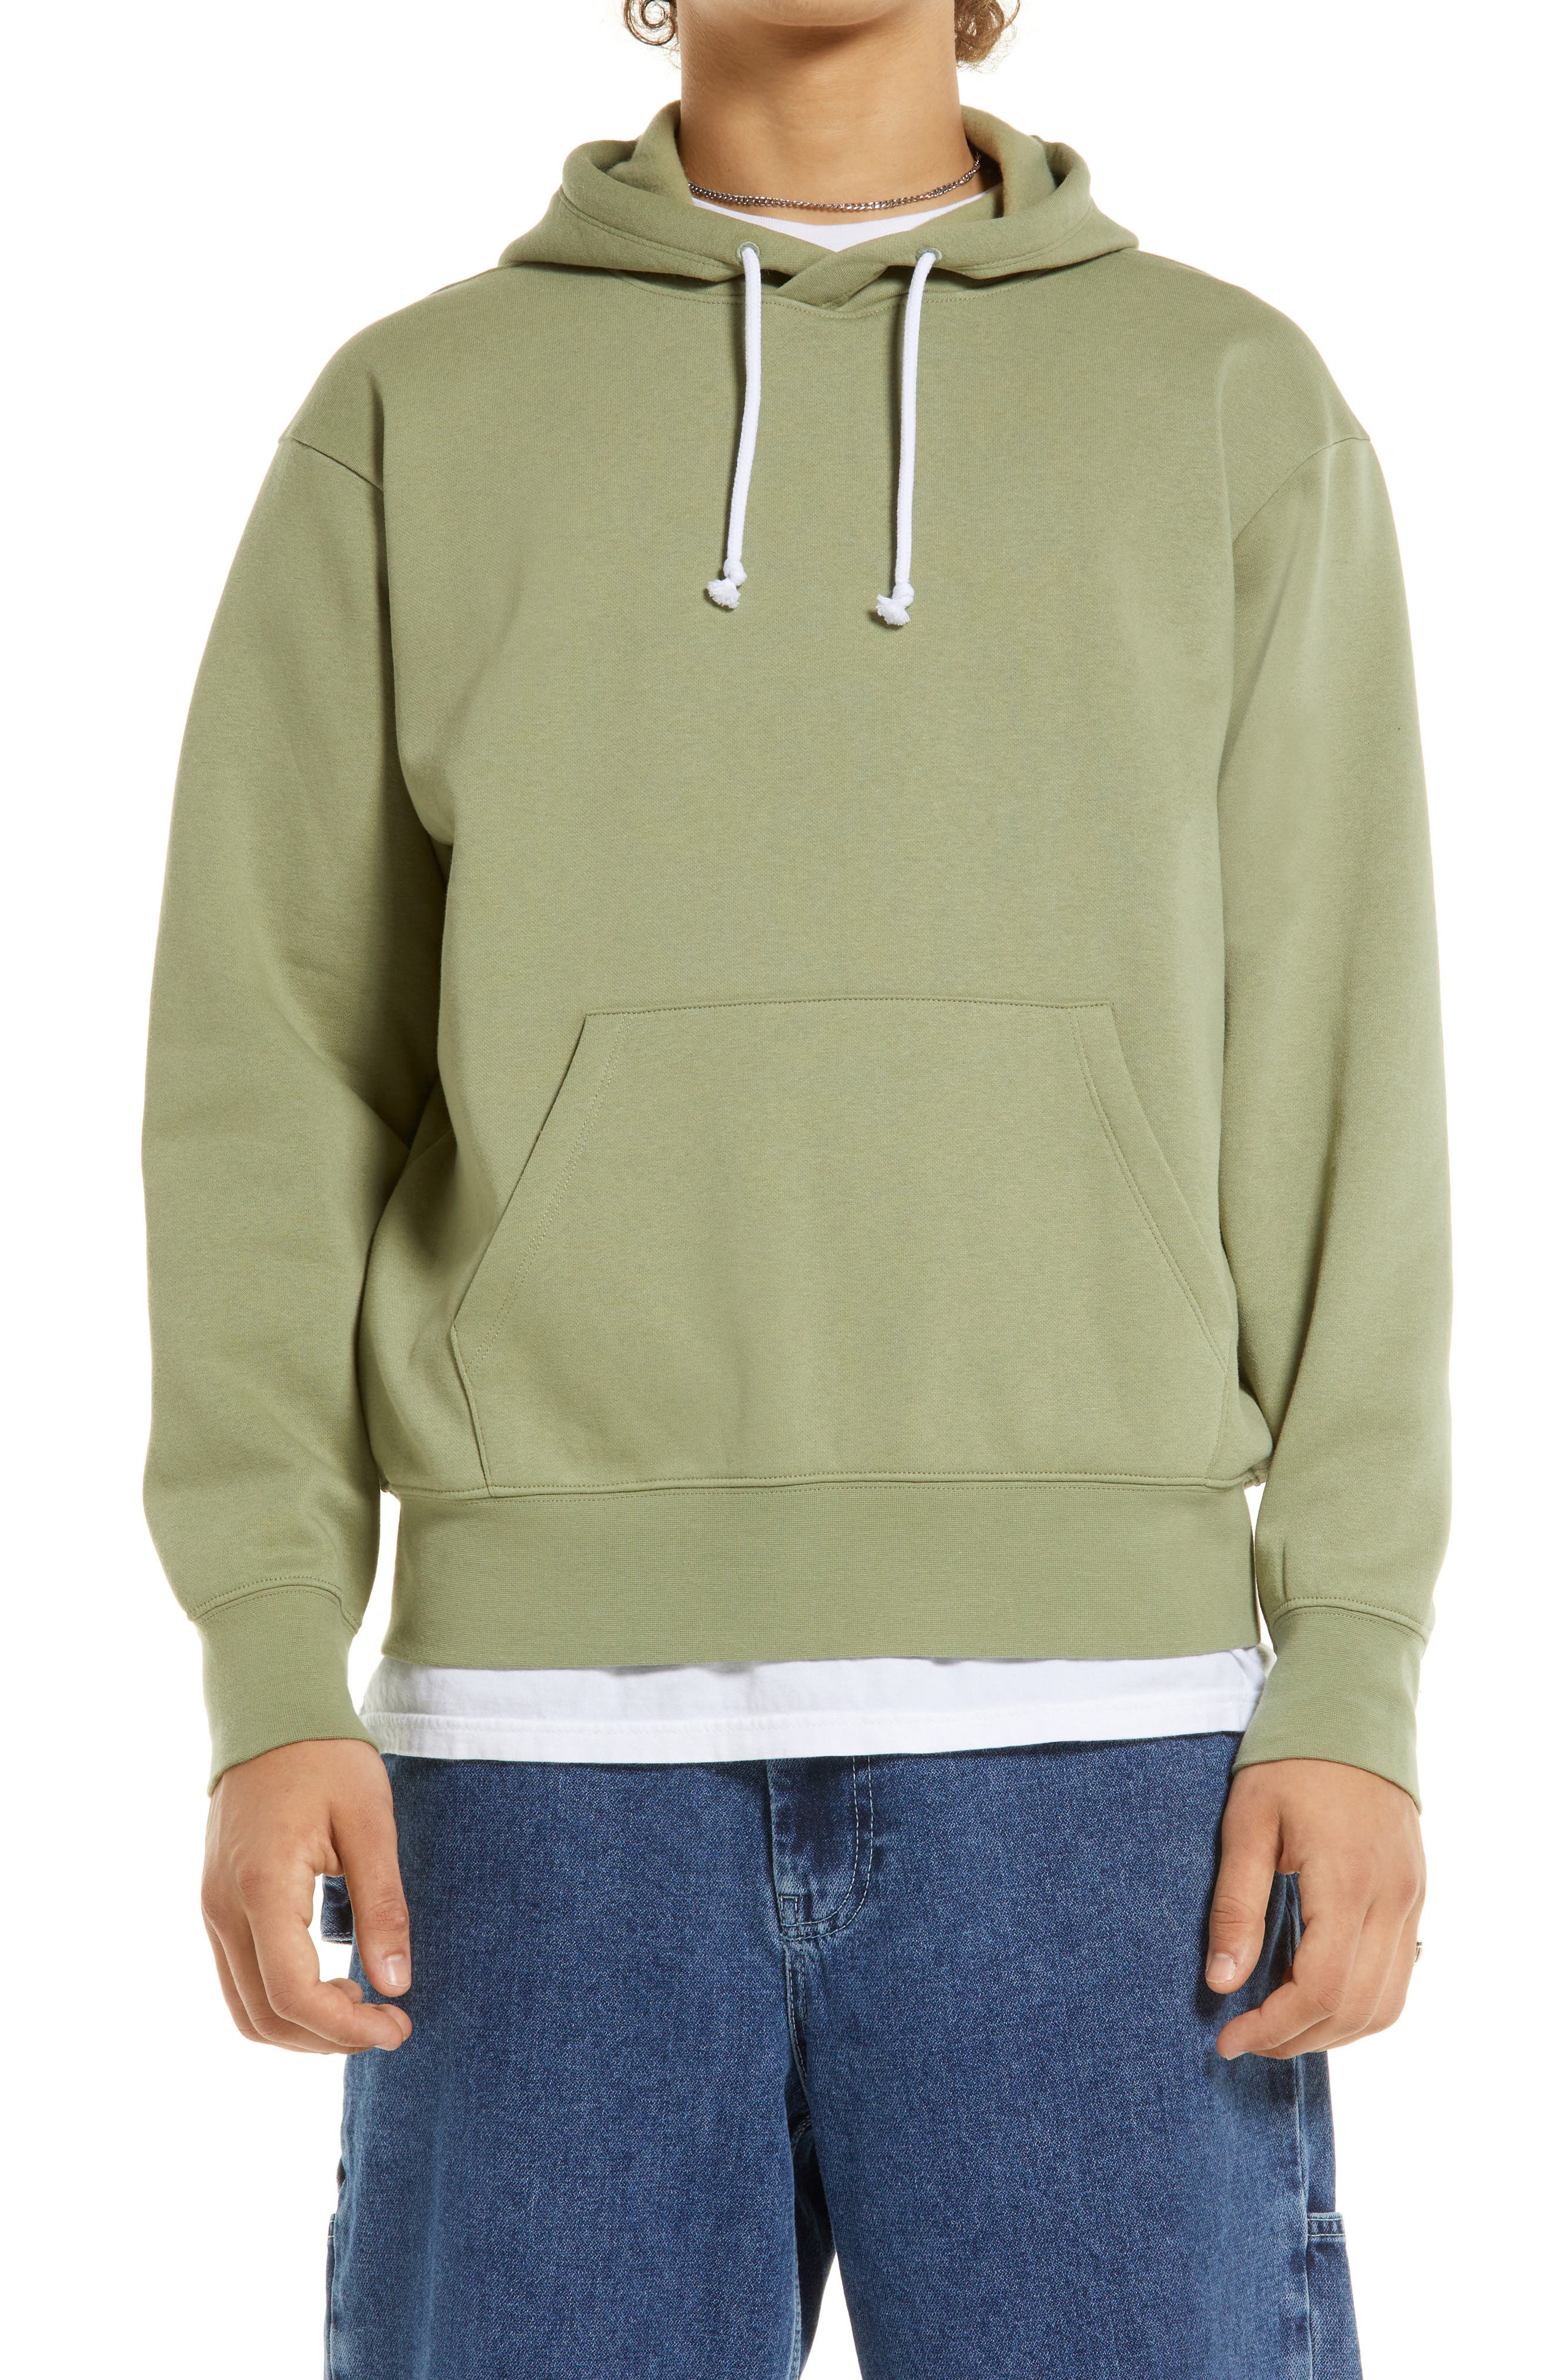 Green L discount 50% Zara sweatshirt MEN FASHION Jumpers & Sweatshirts Hoodie 